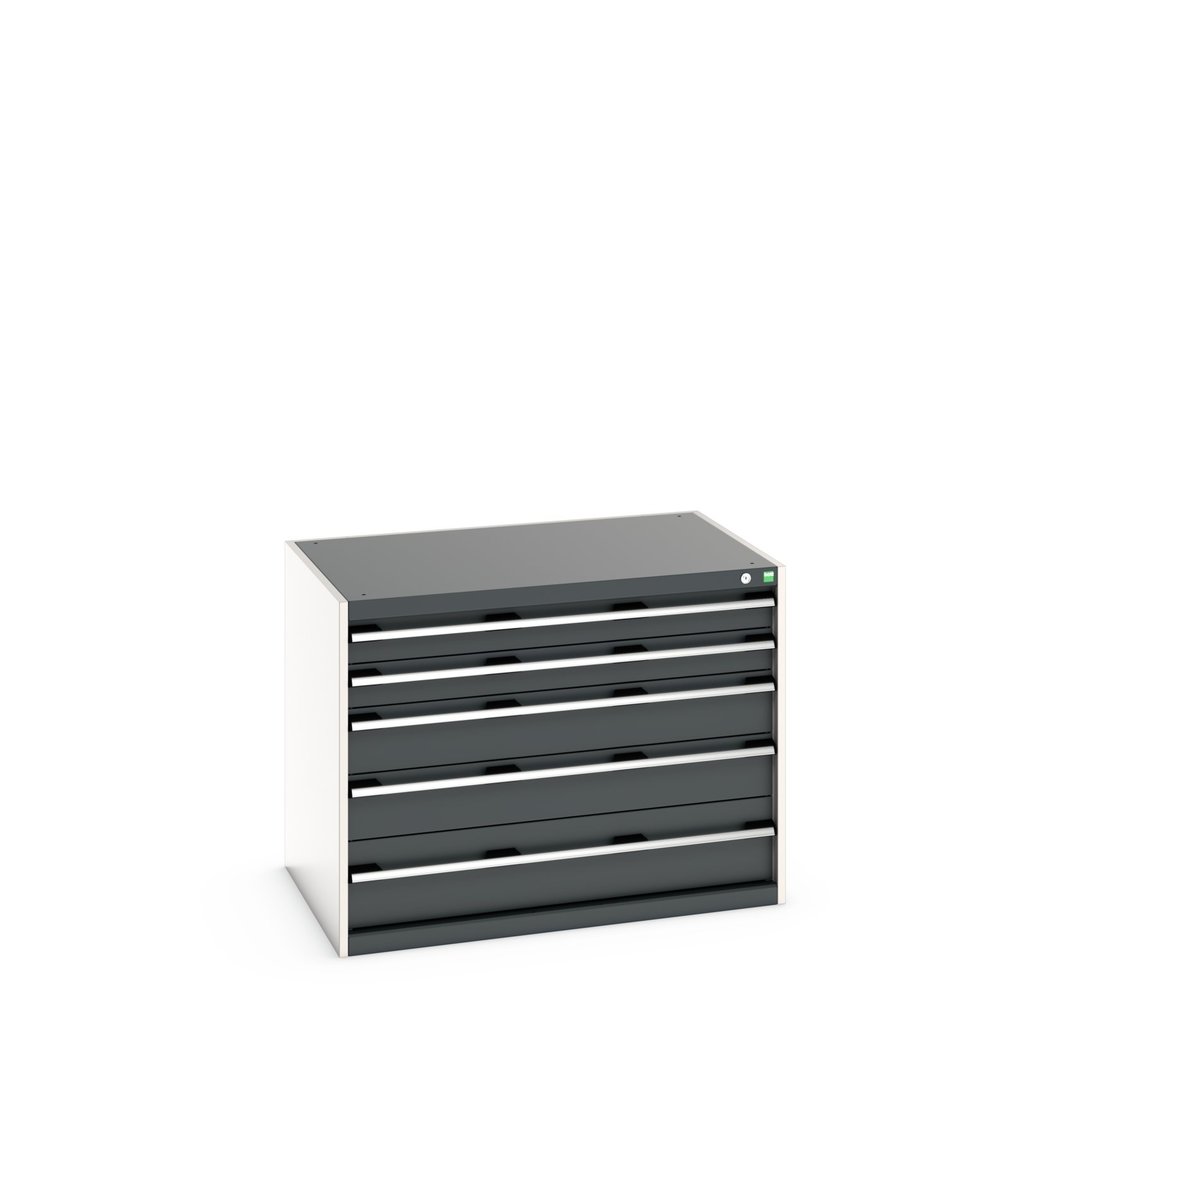 40029009. - cubio drawer cabinet